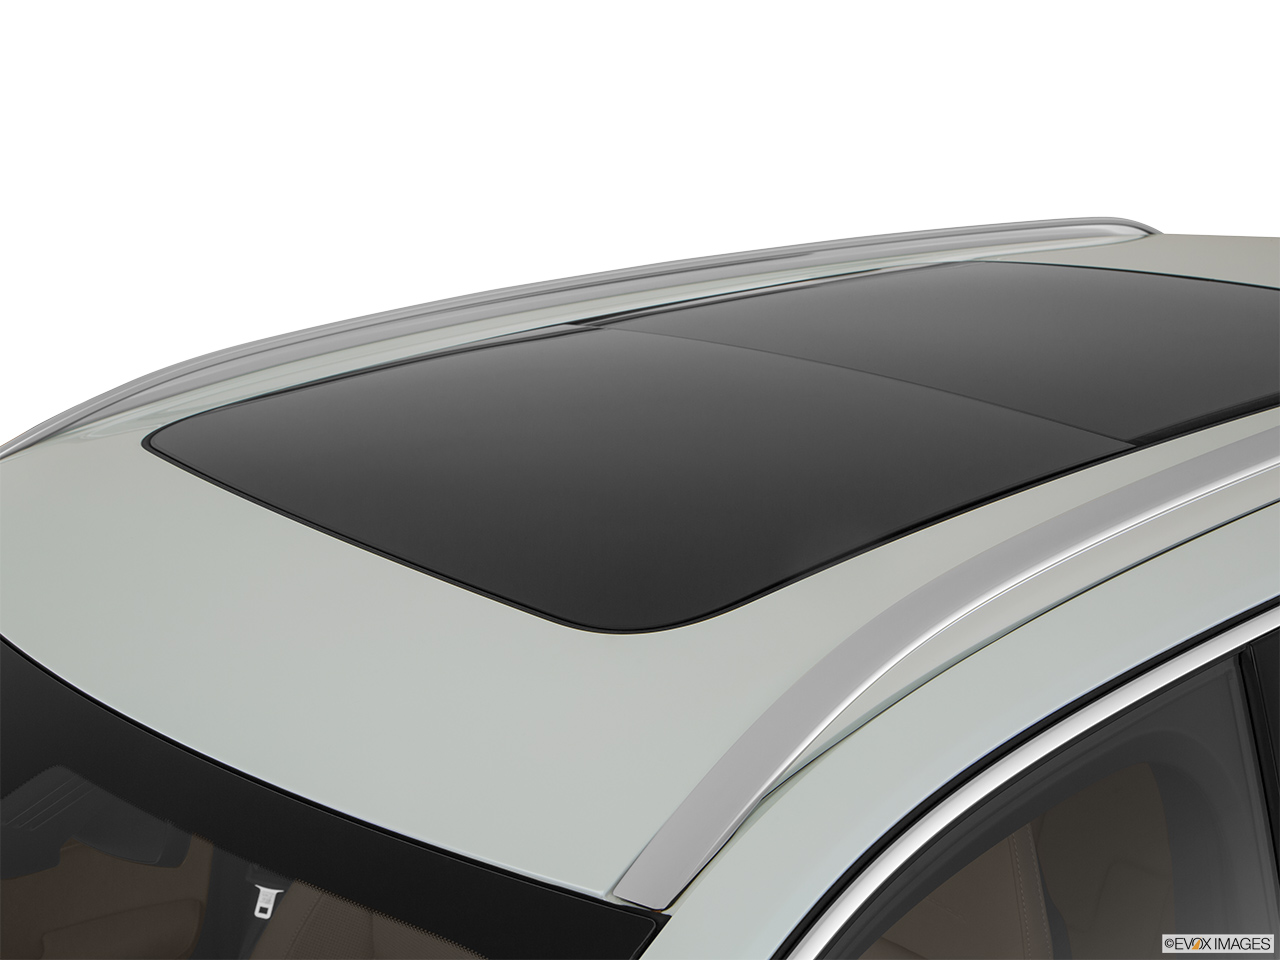 2019 Volvo XC90  T8 Inscription eAWD Plug-in Hybrid Sunroof/moonroof. 